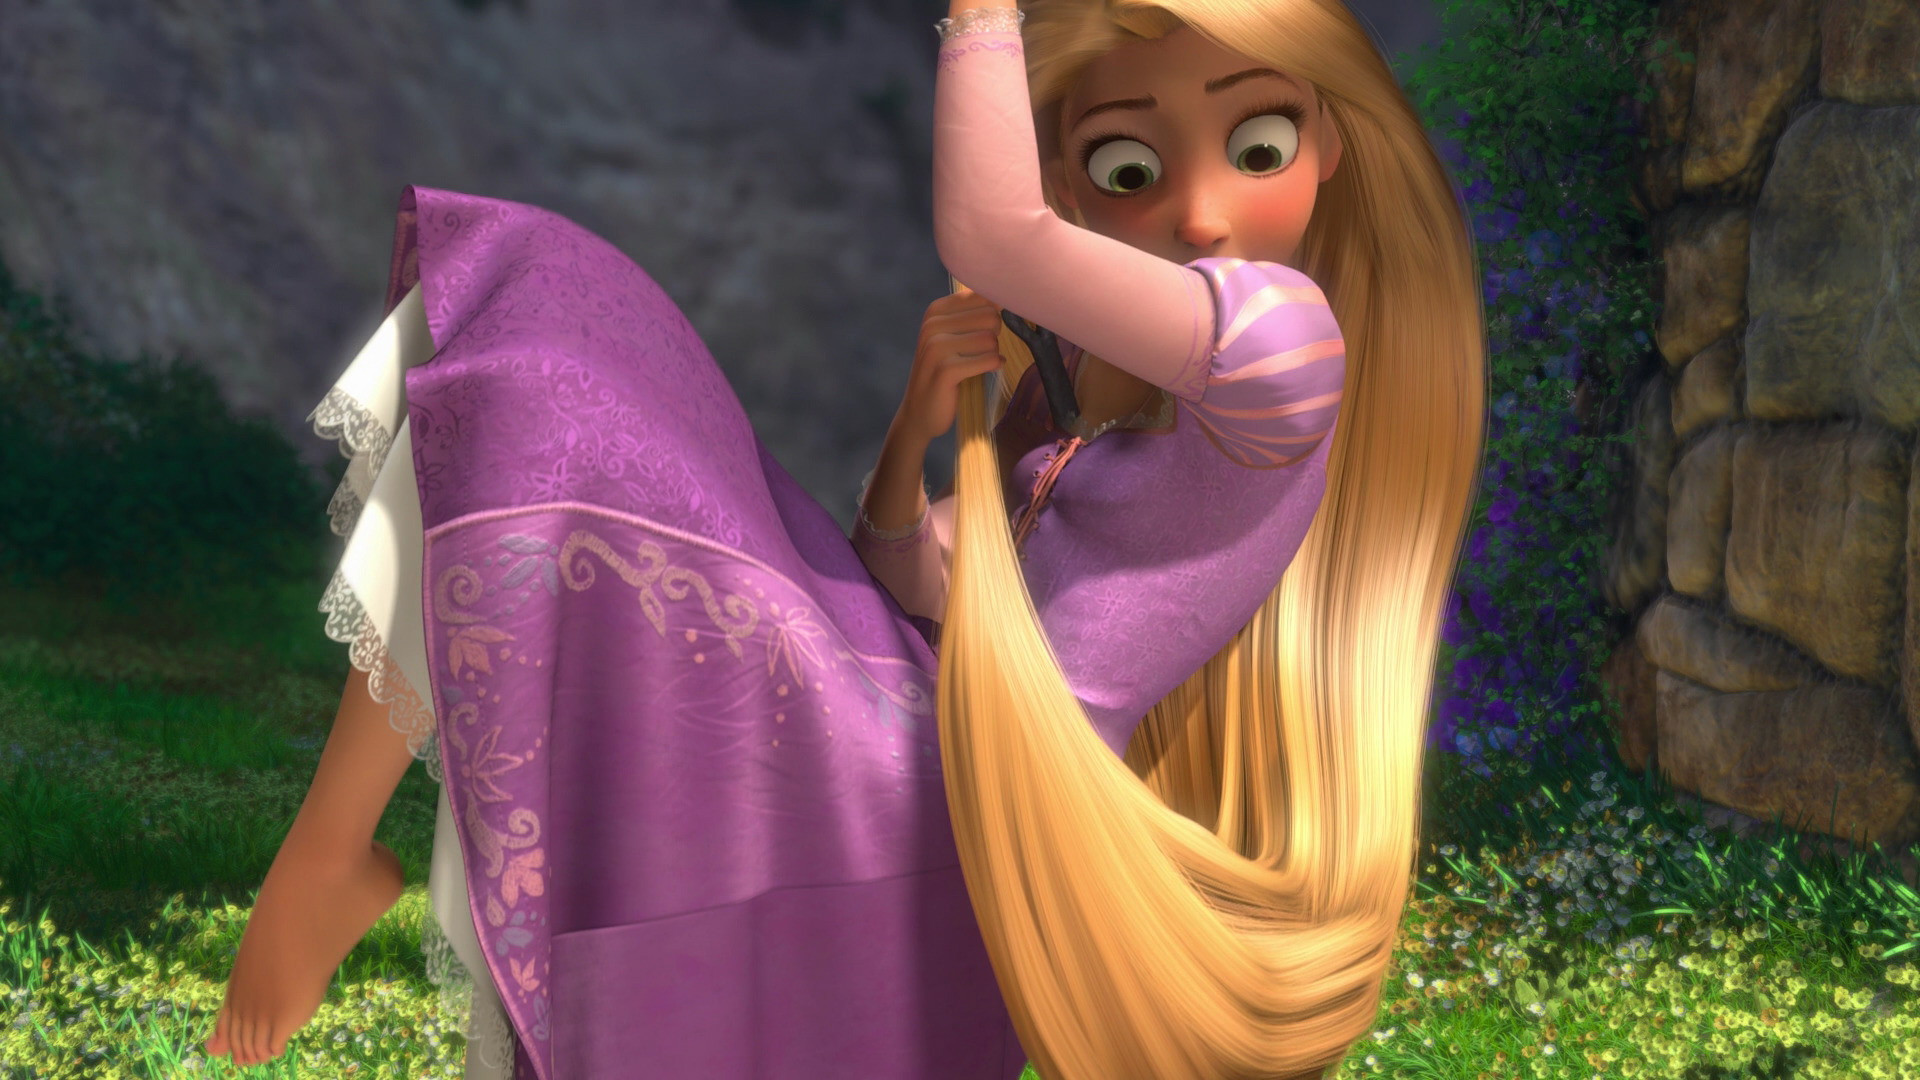 1920x1080 Rapunzel of Disney Princesses images Rapunzel - My Life Begin HD ...